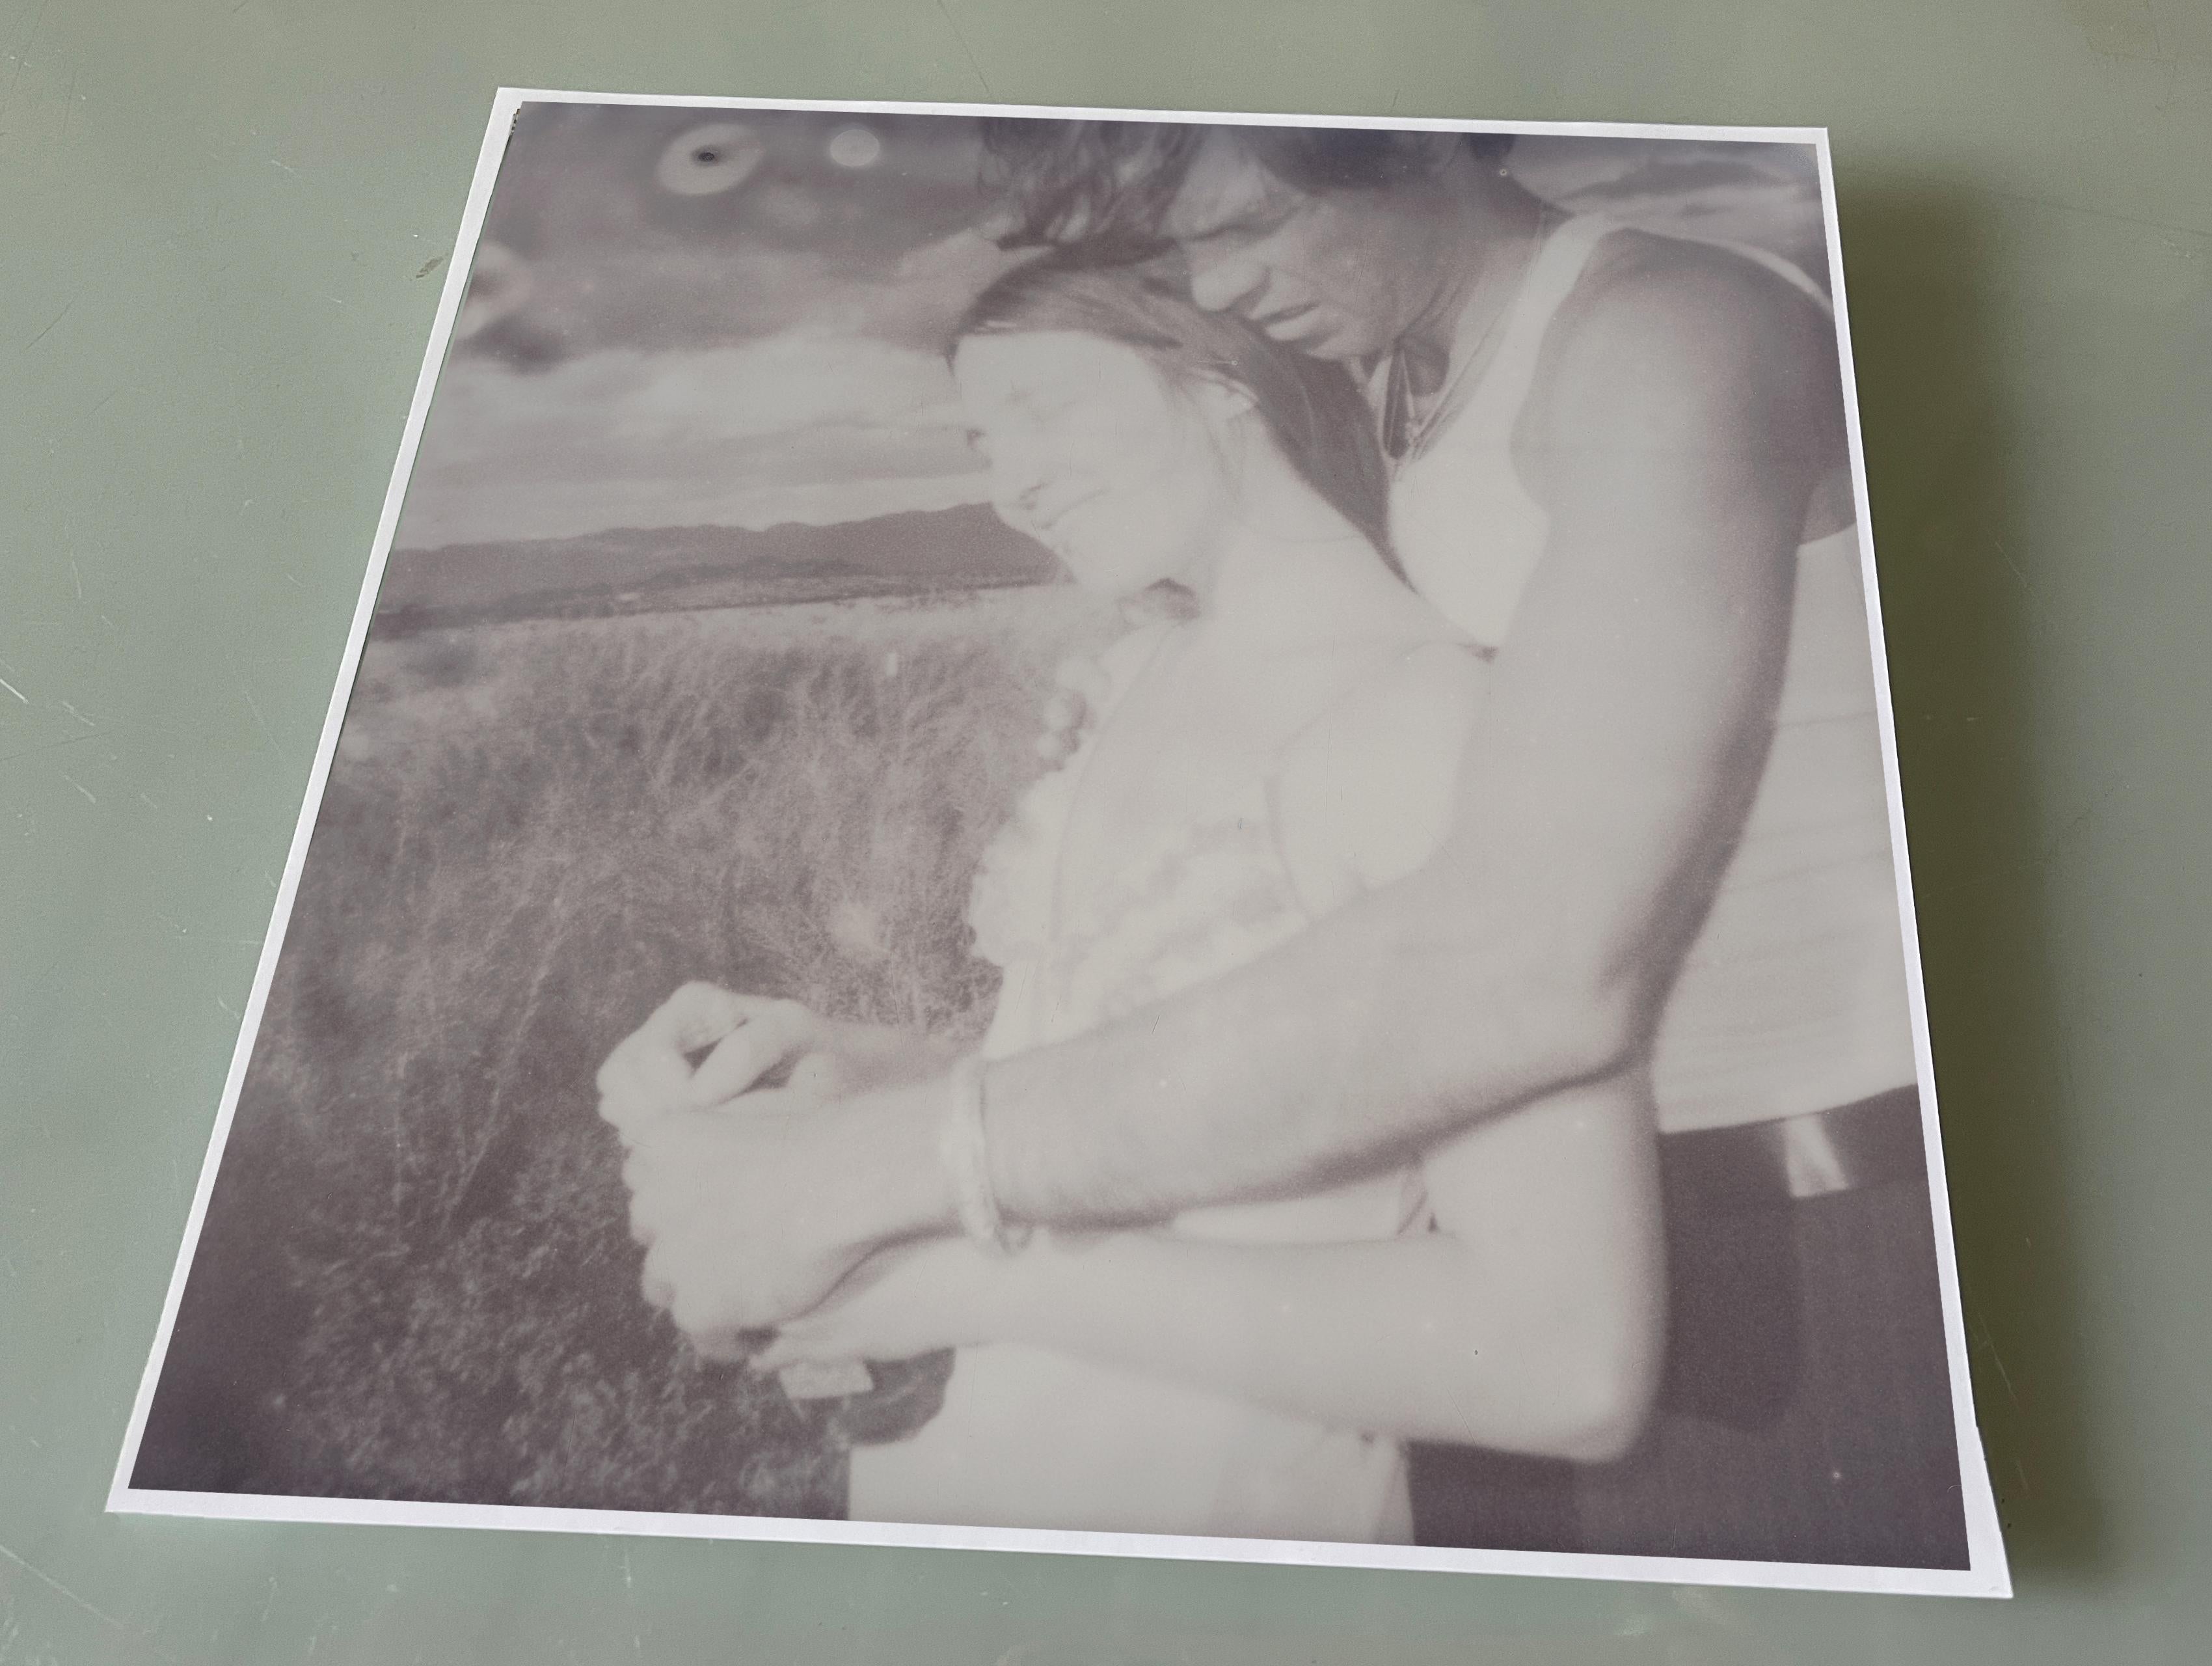 Un homme et une femme (Sidewinder) - Polaroid contemporain, expired, photographie - Photograph de Stefanie Schneider